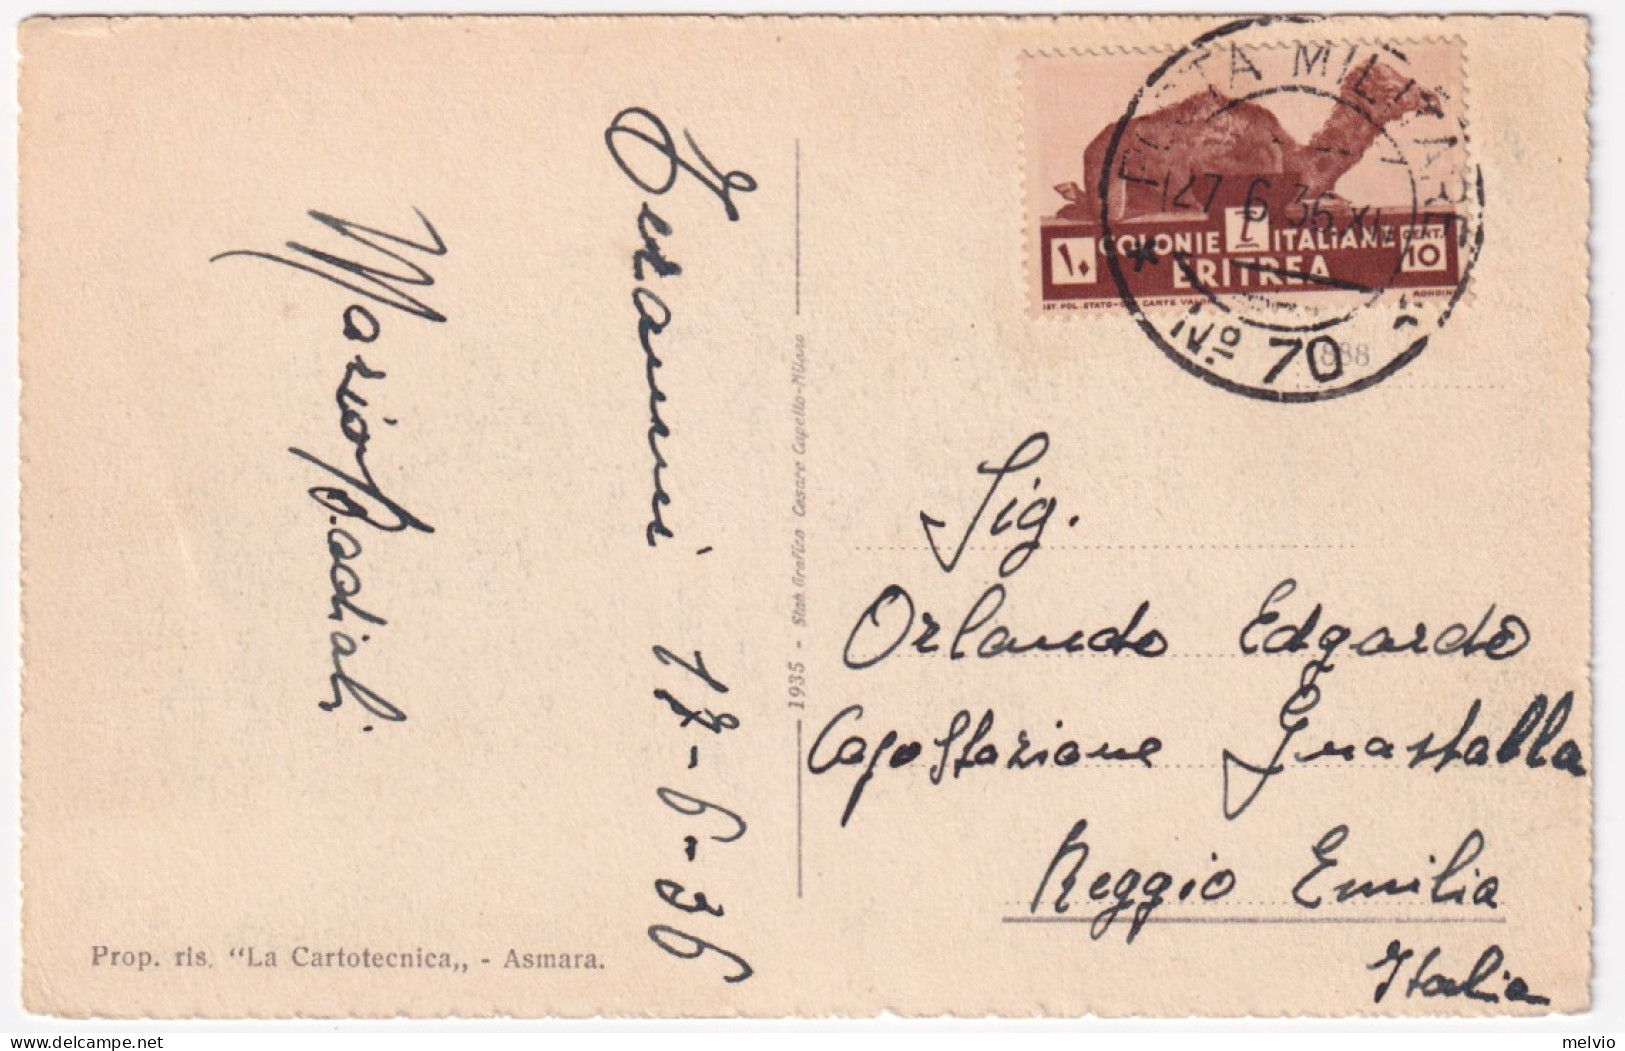 1936-Posta Militare/N 70 C.2 (18.6) Su Cartolina (Corteo Nuziale Mussulmano) Aff - Erythrée